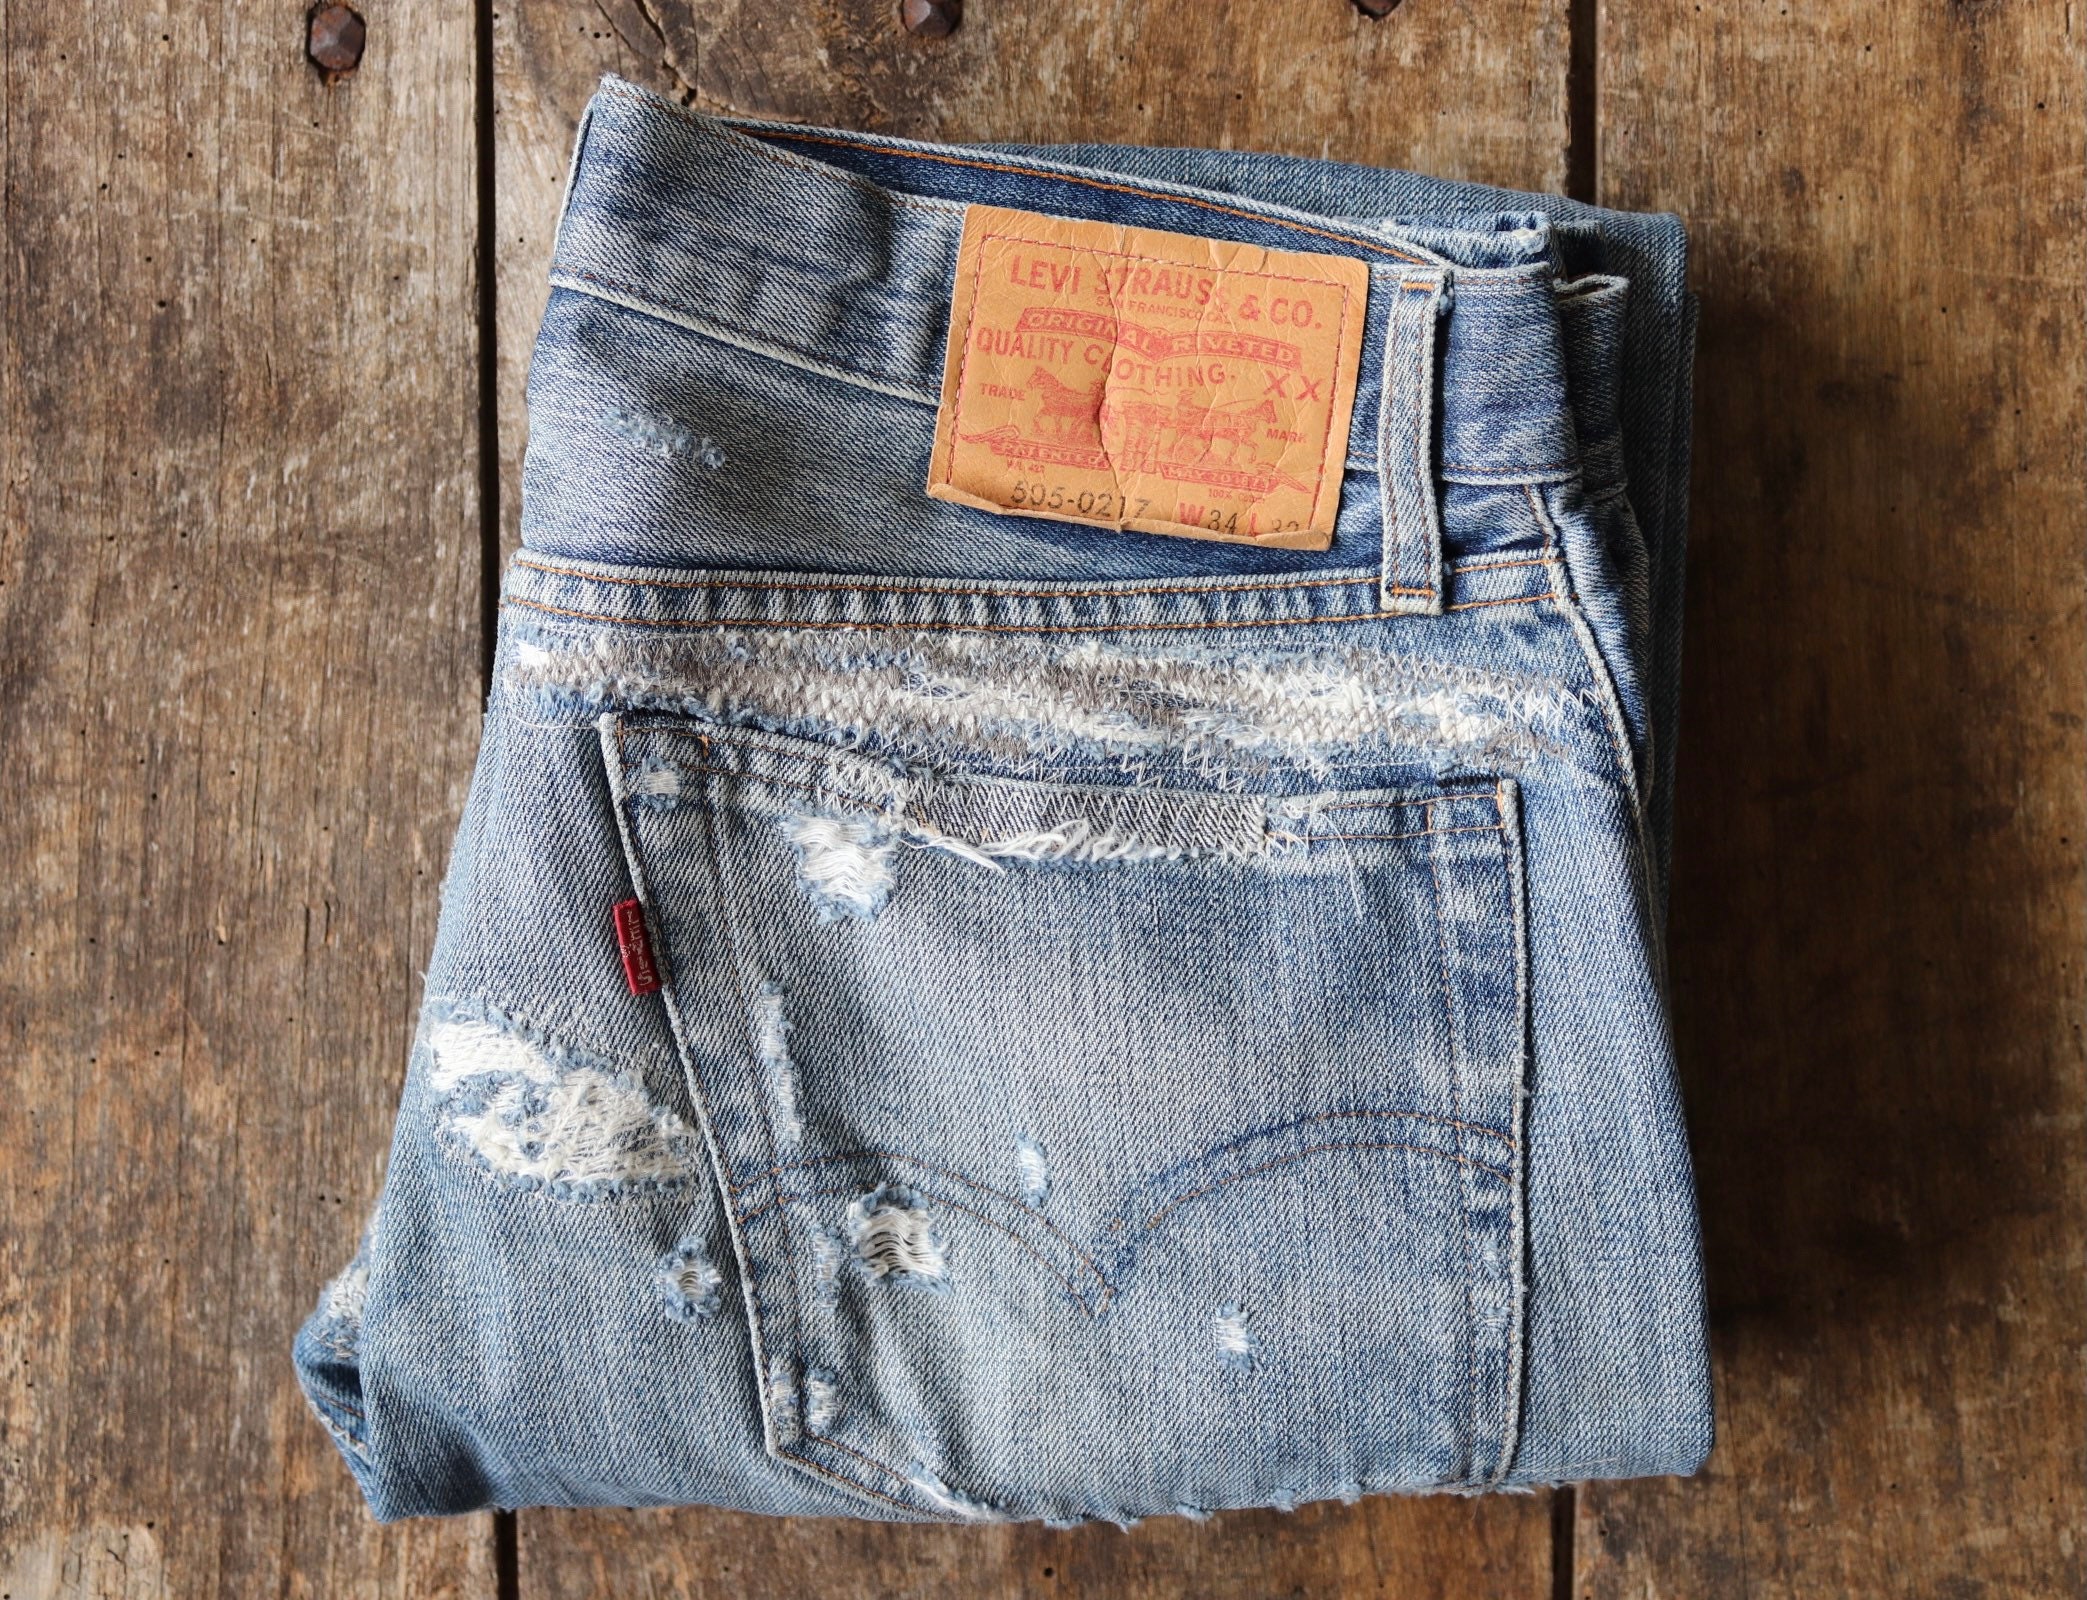 Vintage Levi Strauss Levis LVC selvedge denim jeans 505-0217 distressed  repaired darned workwear work chore 34” x 32” Talon zipper